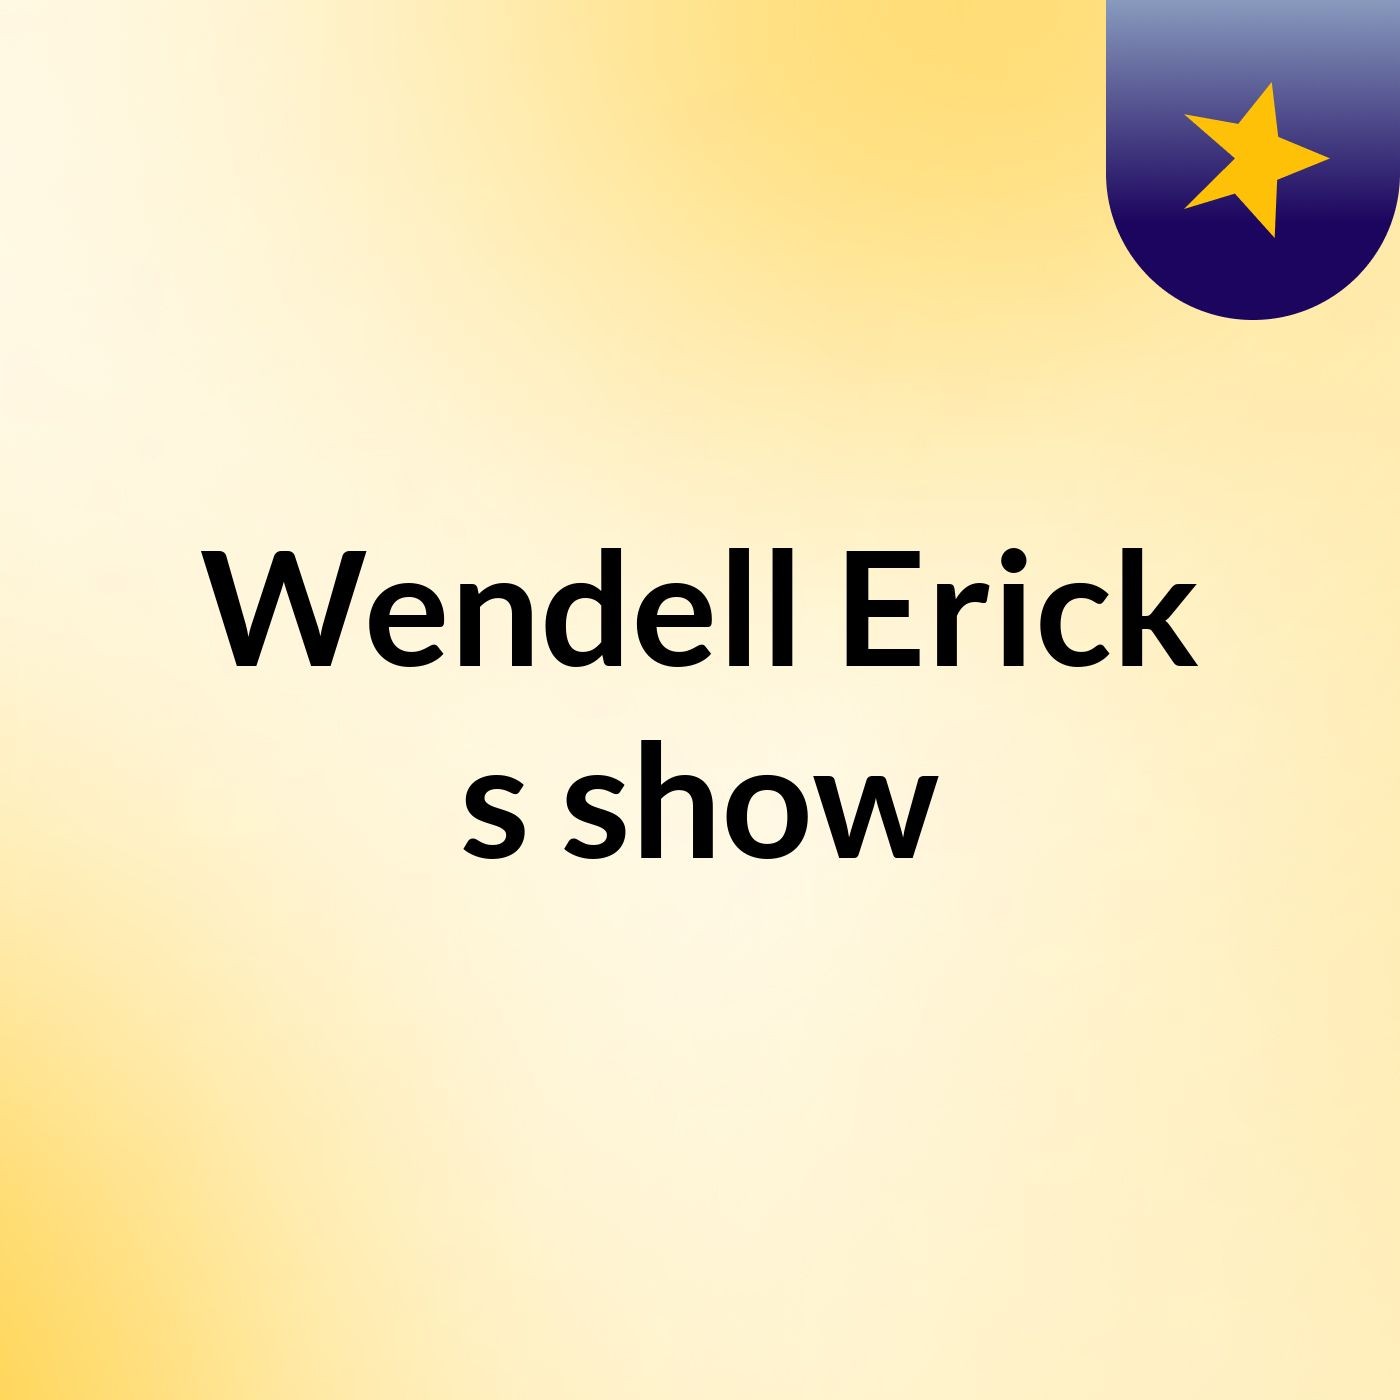 Wendell Erick's show